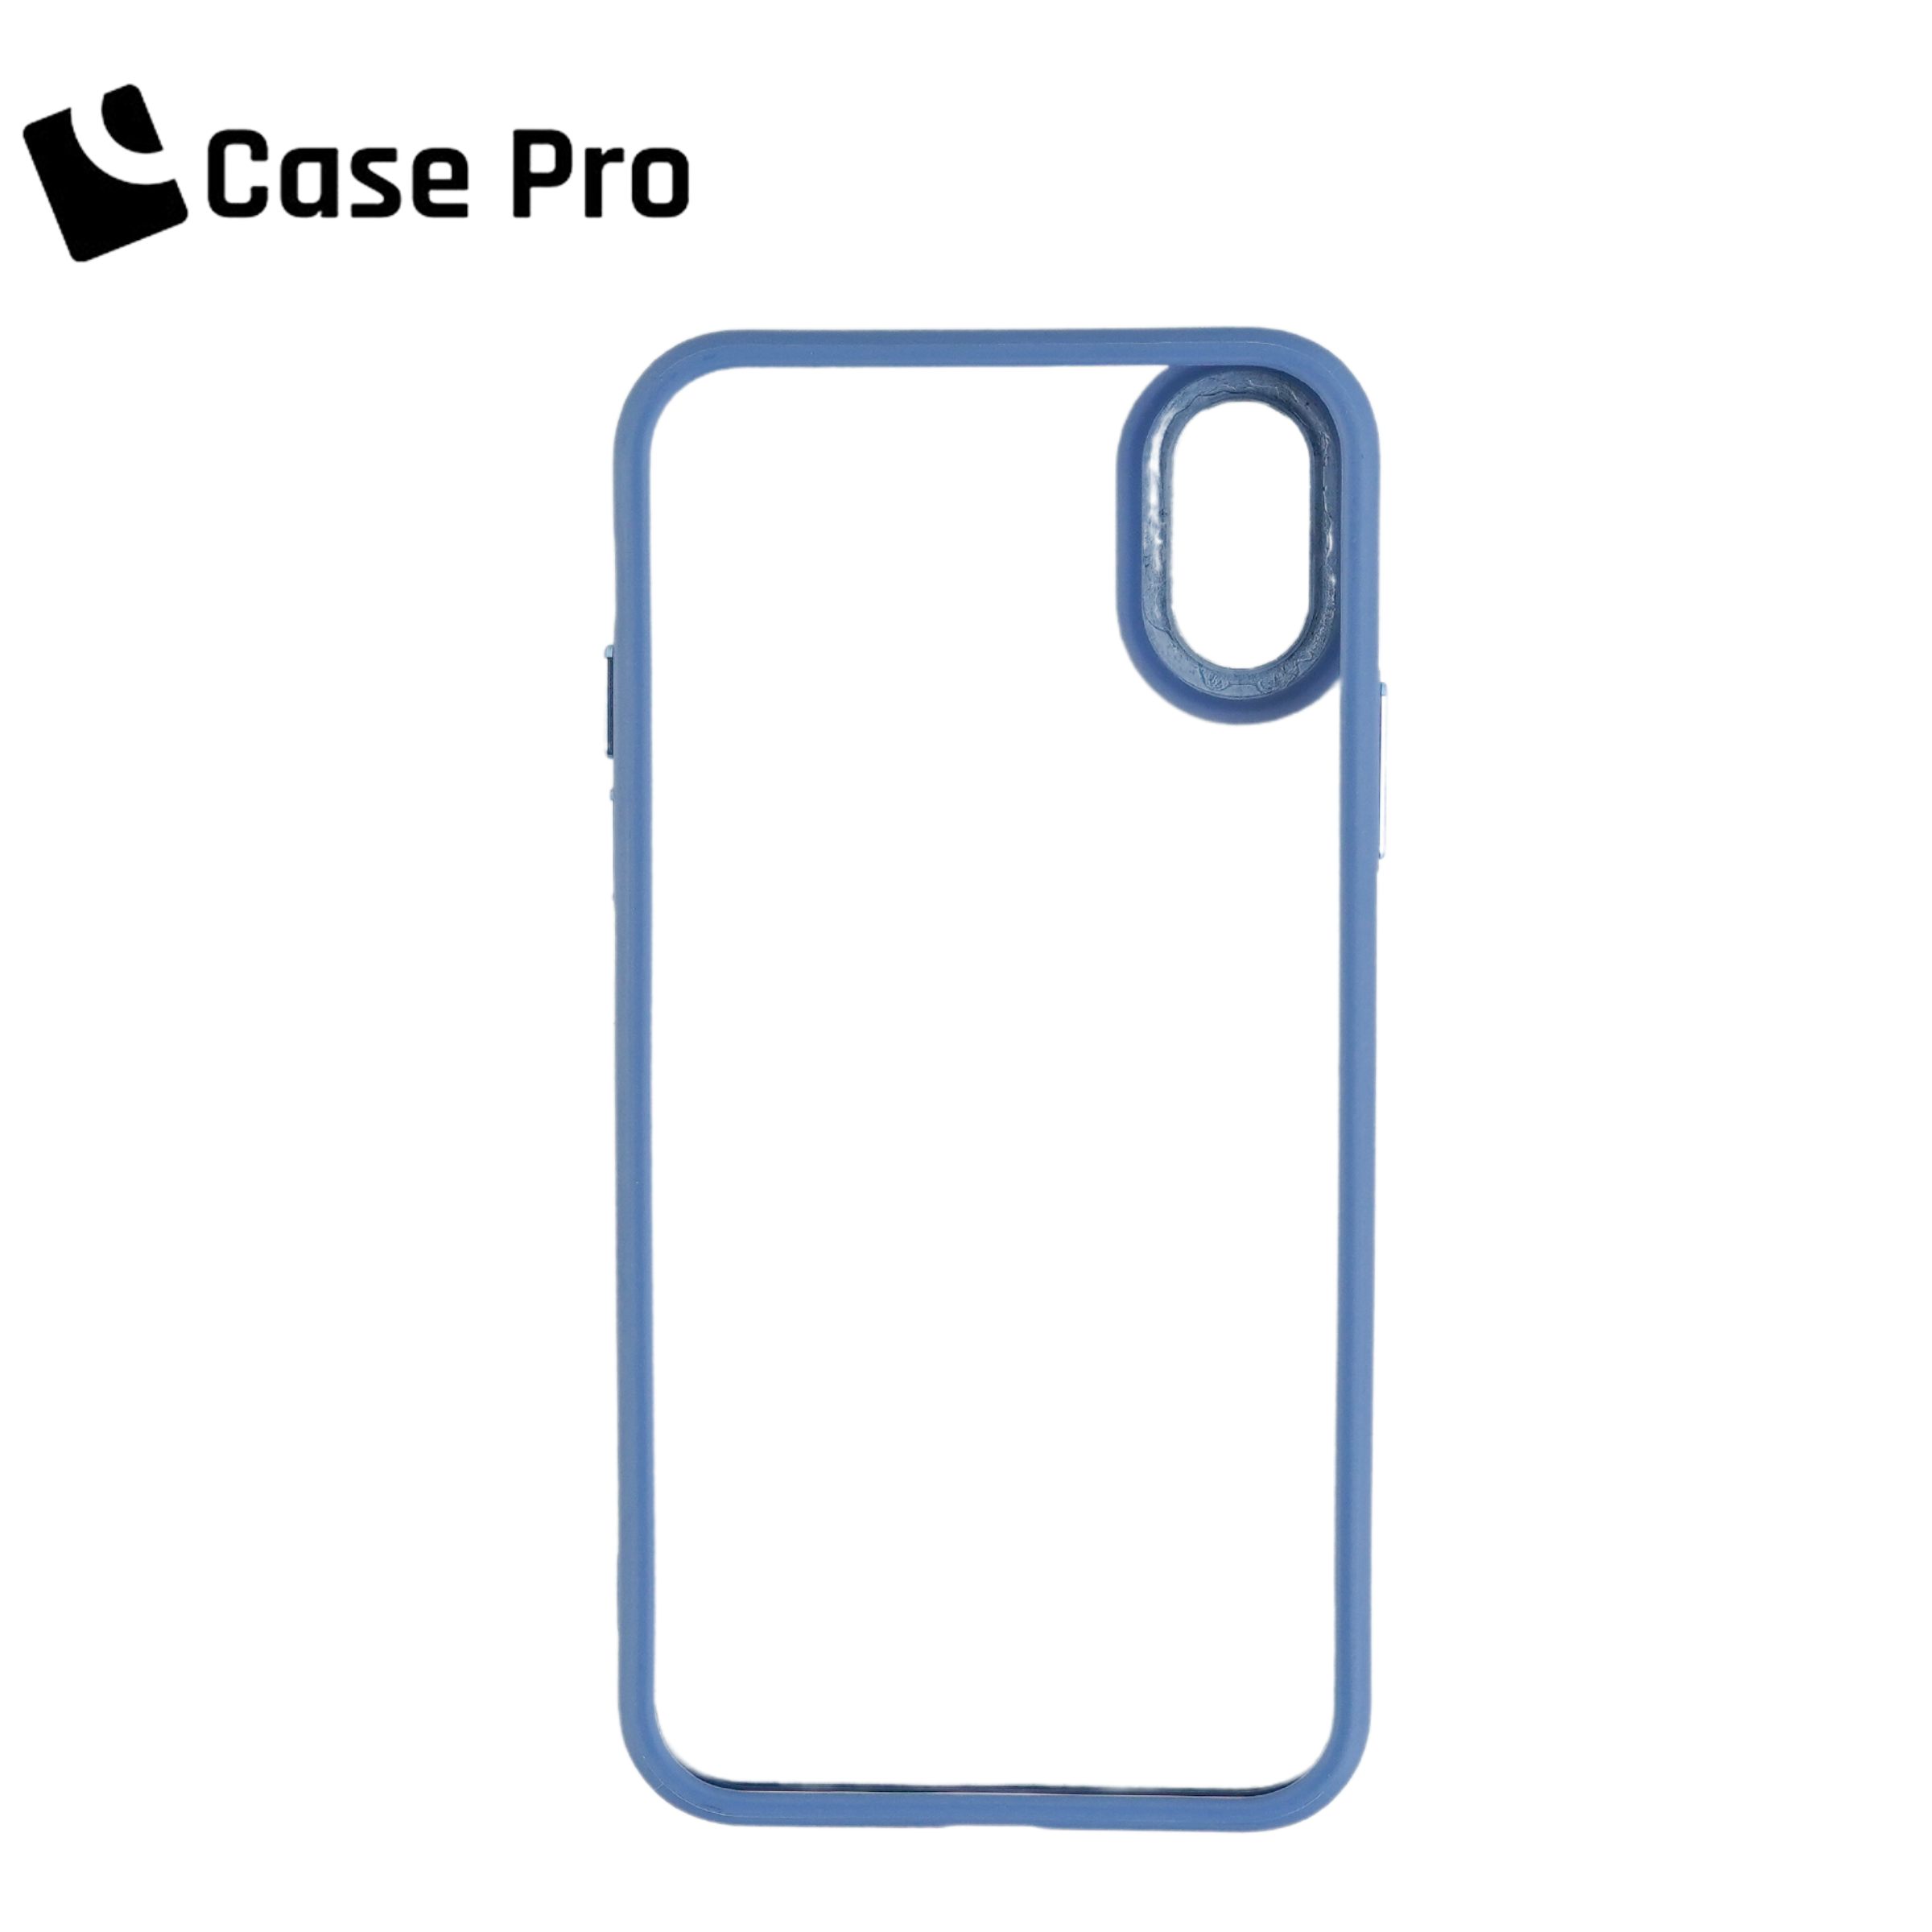 CasePro  iPhone XS Max Case (Crystal Hybrid)